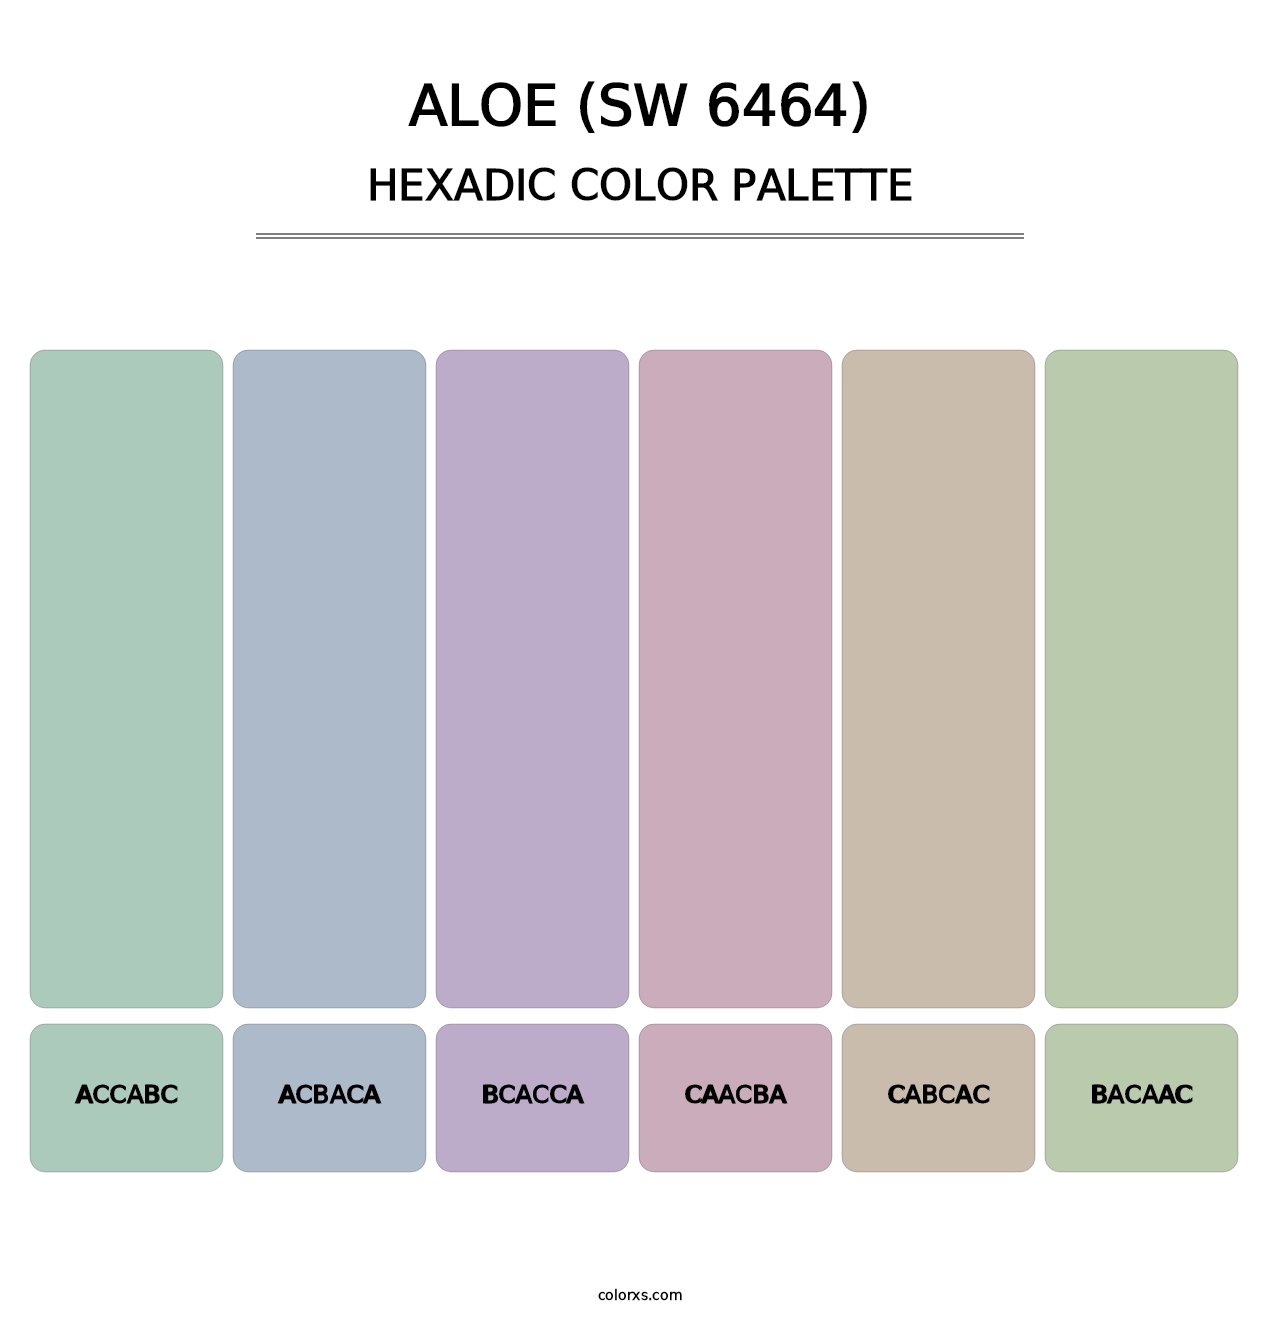 Aloe (SW 6464) - Hexadic Color Palette